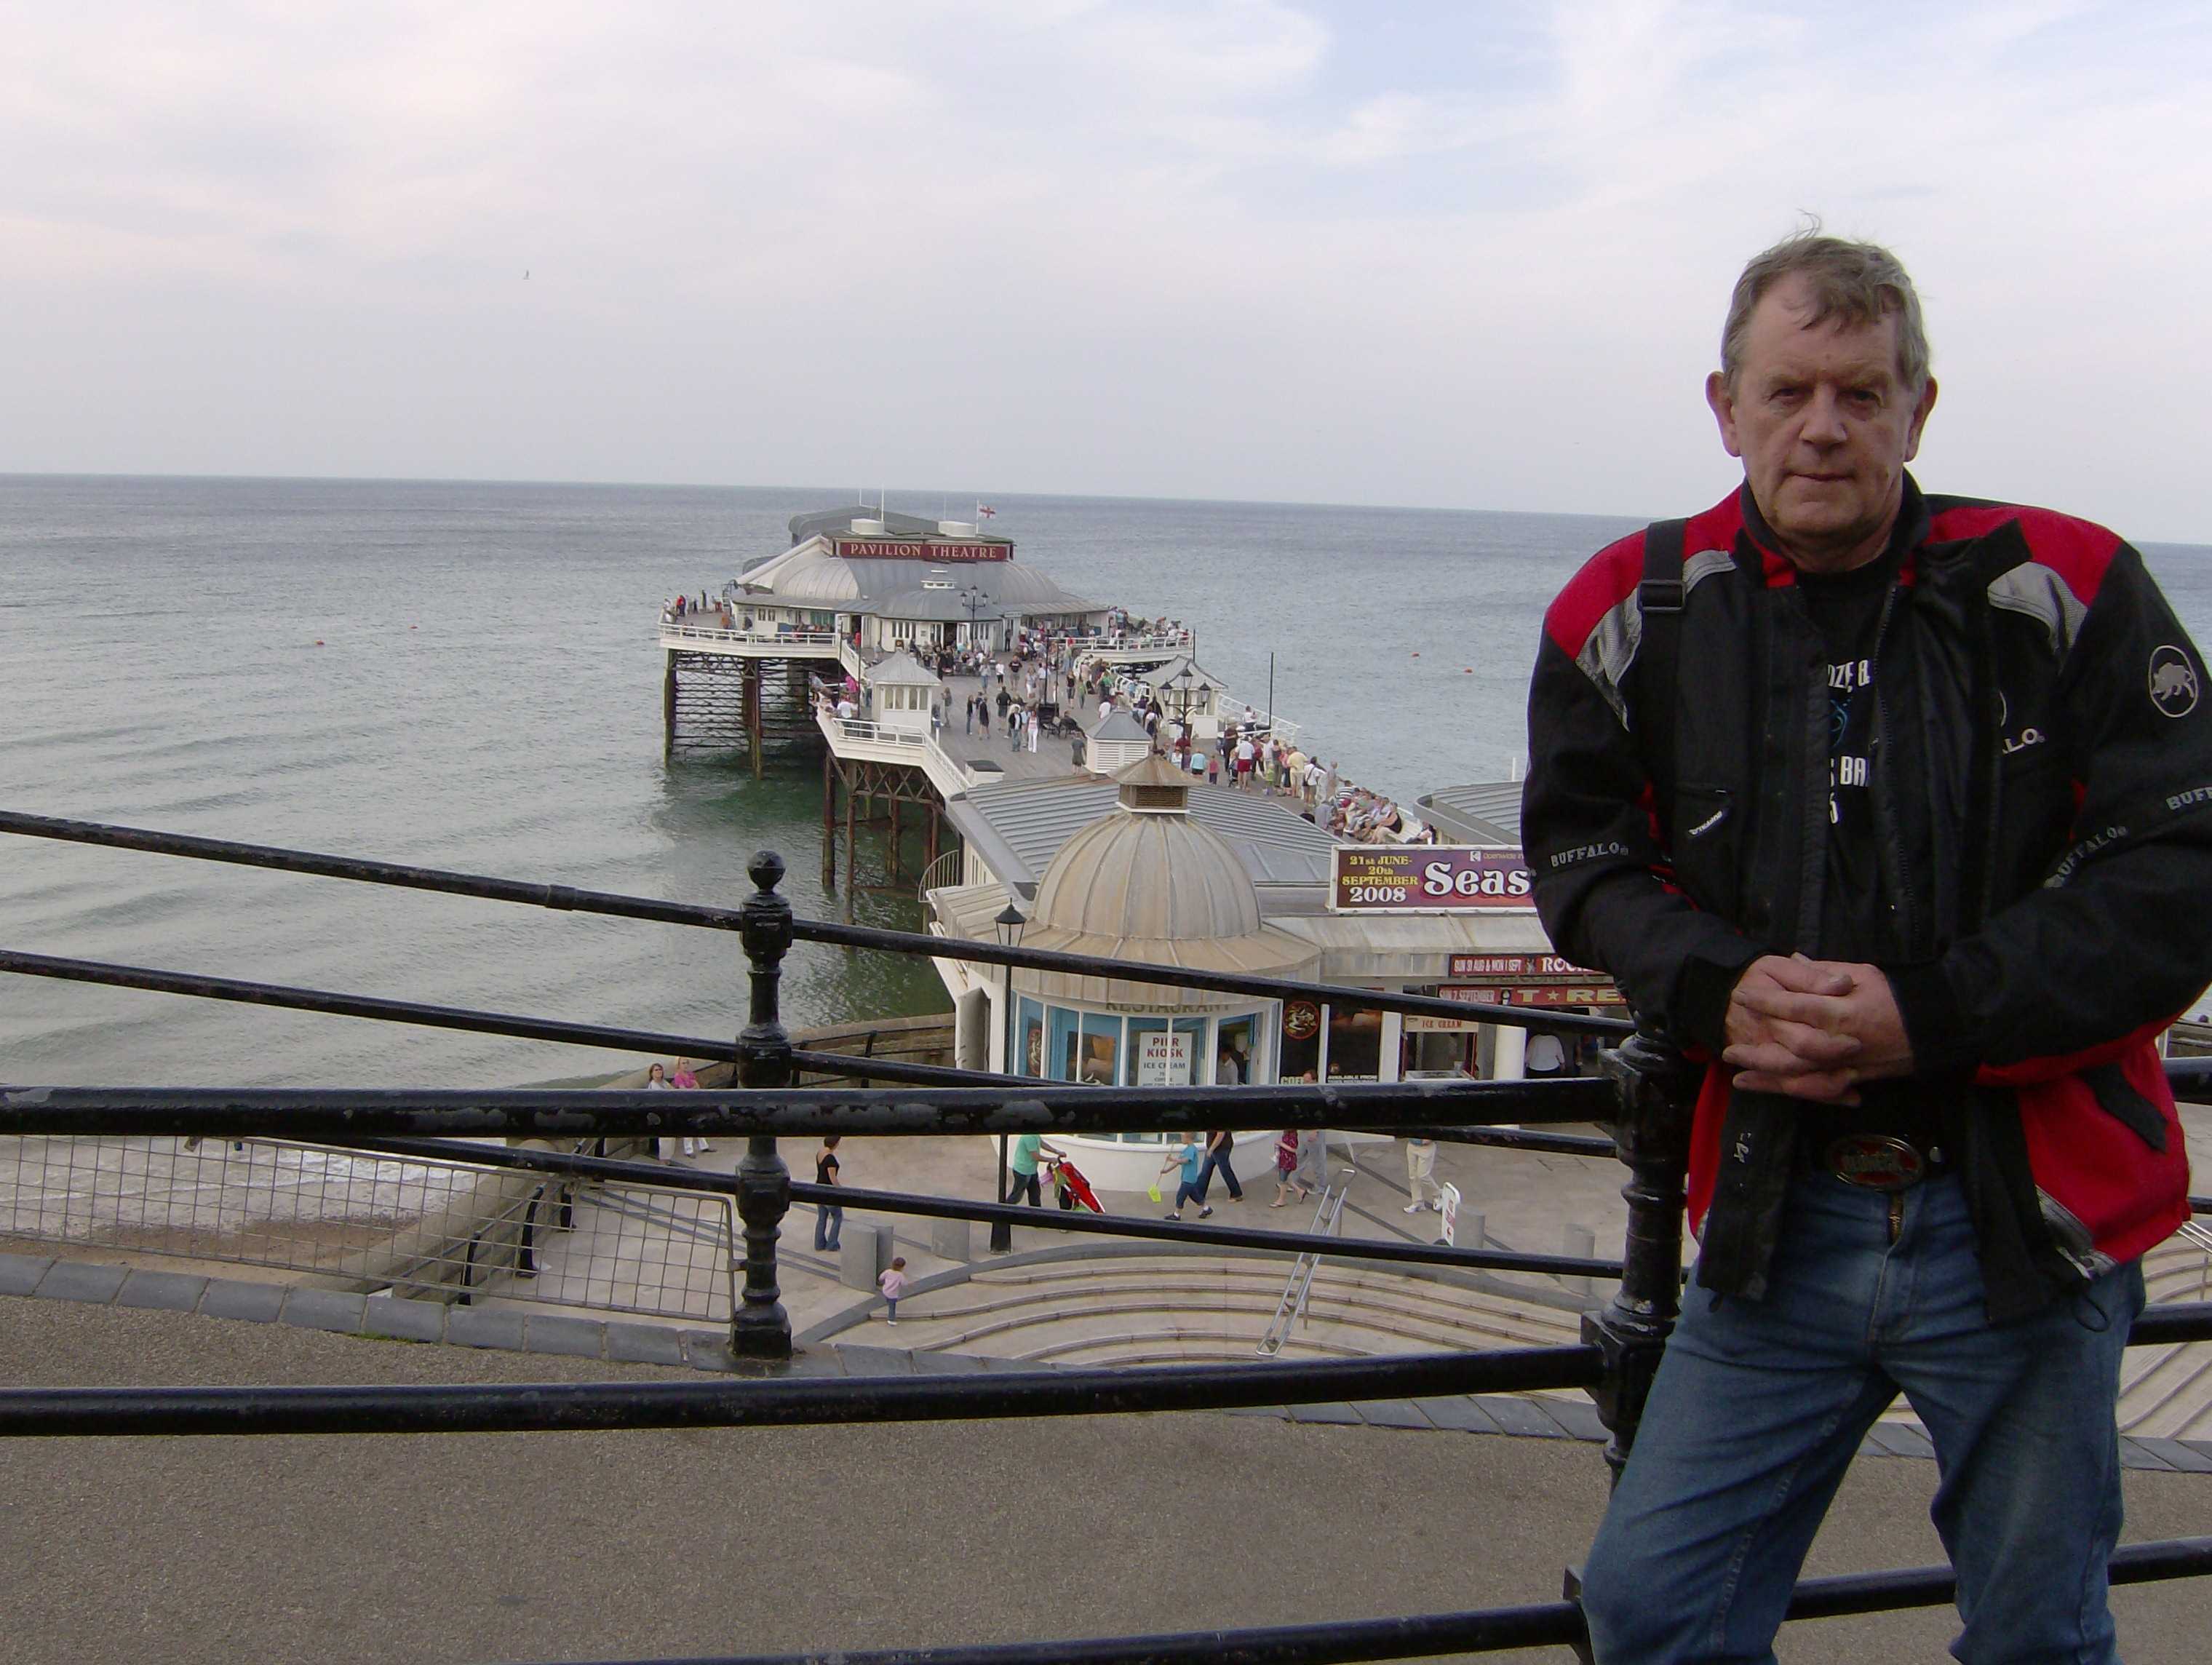 Me, Cromer Pier, and a calm North Sea!